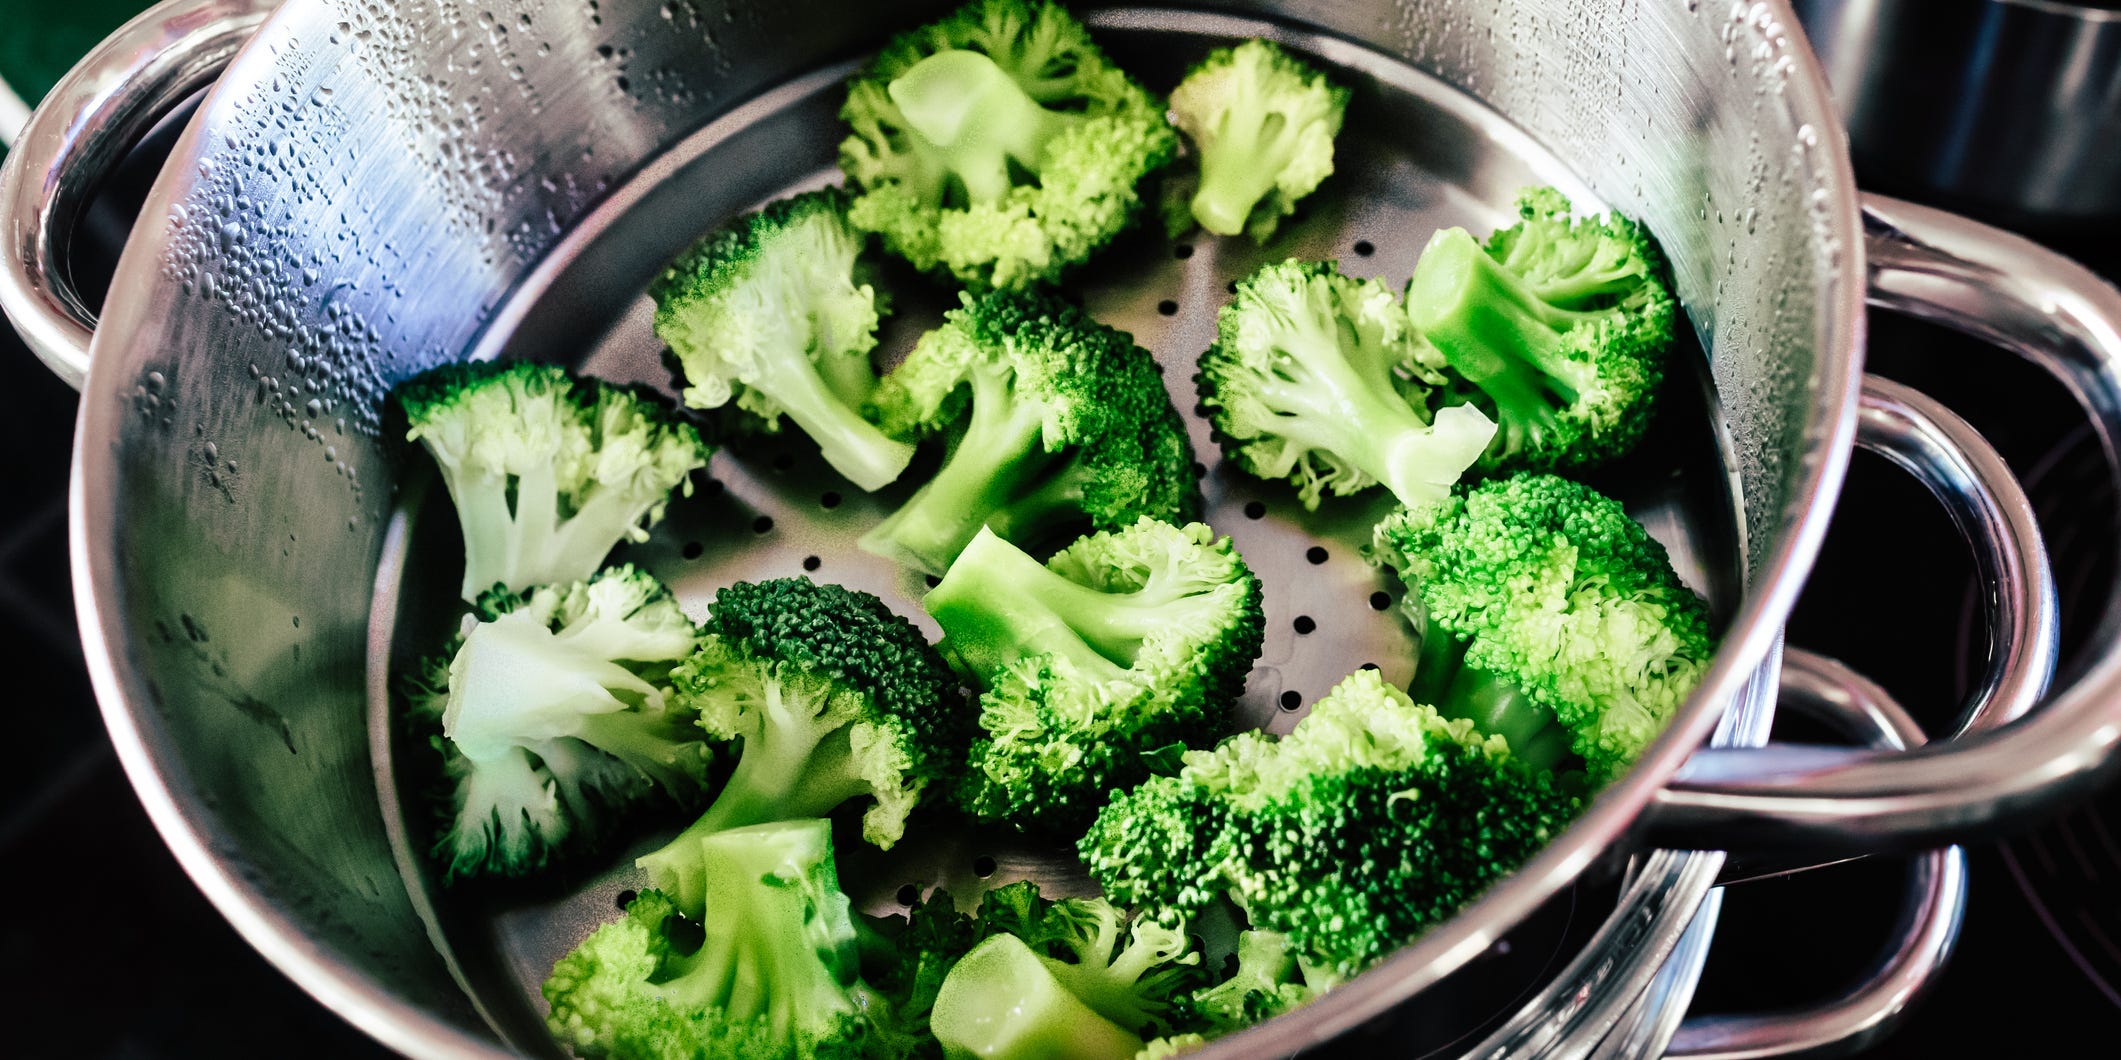 Broccoli in a steamer basket.